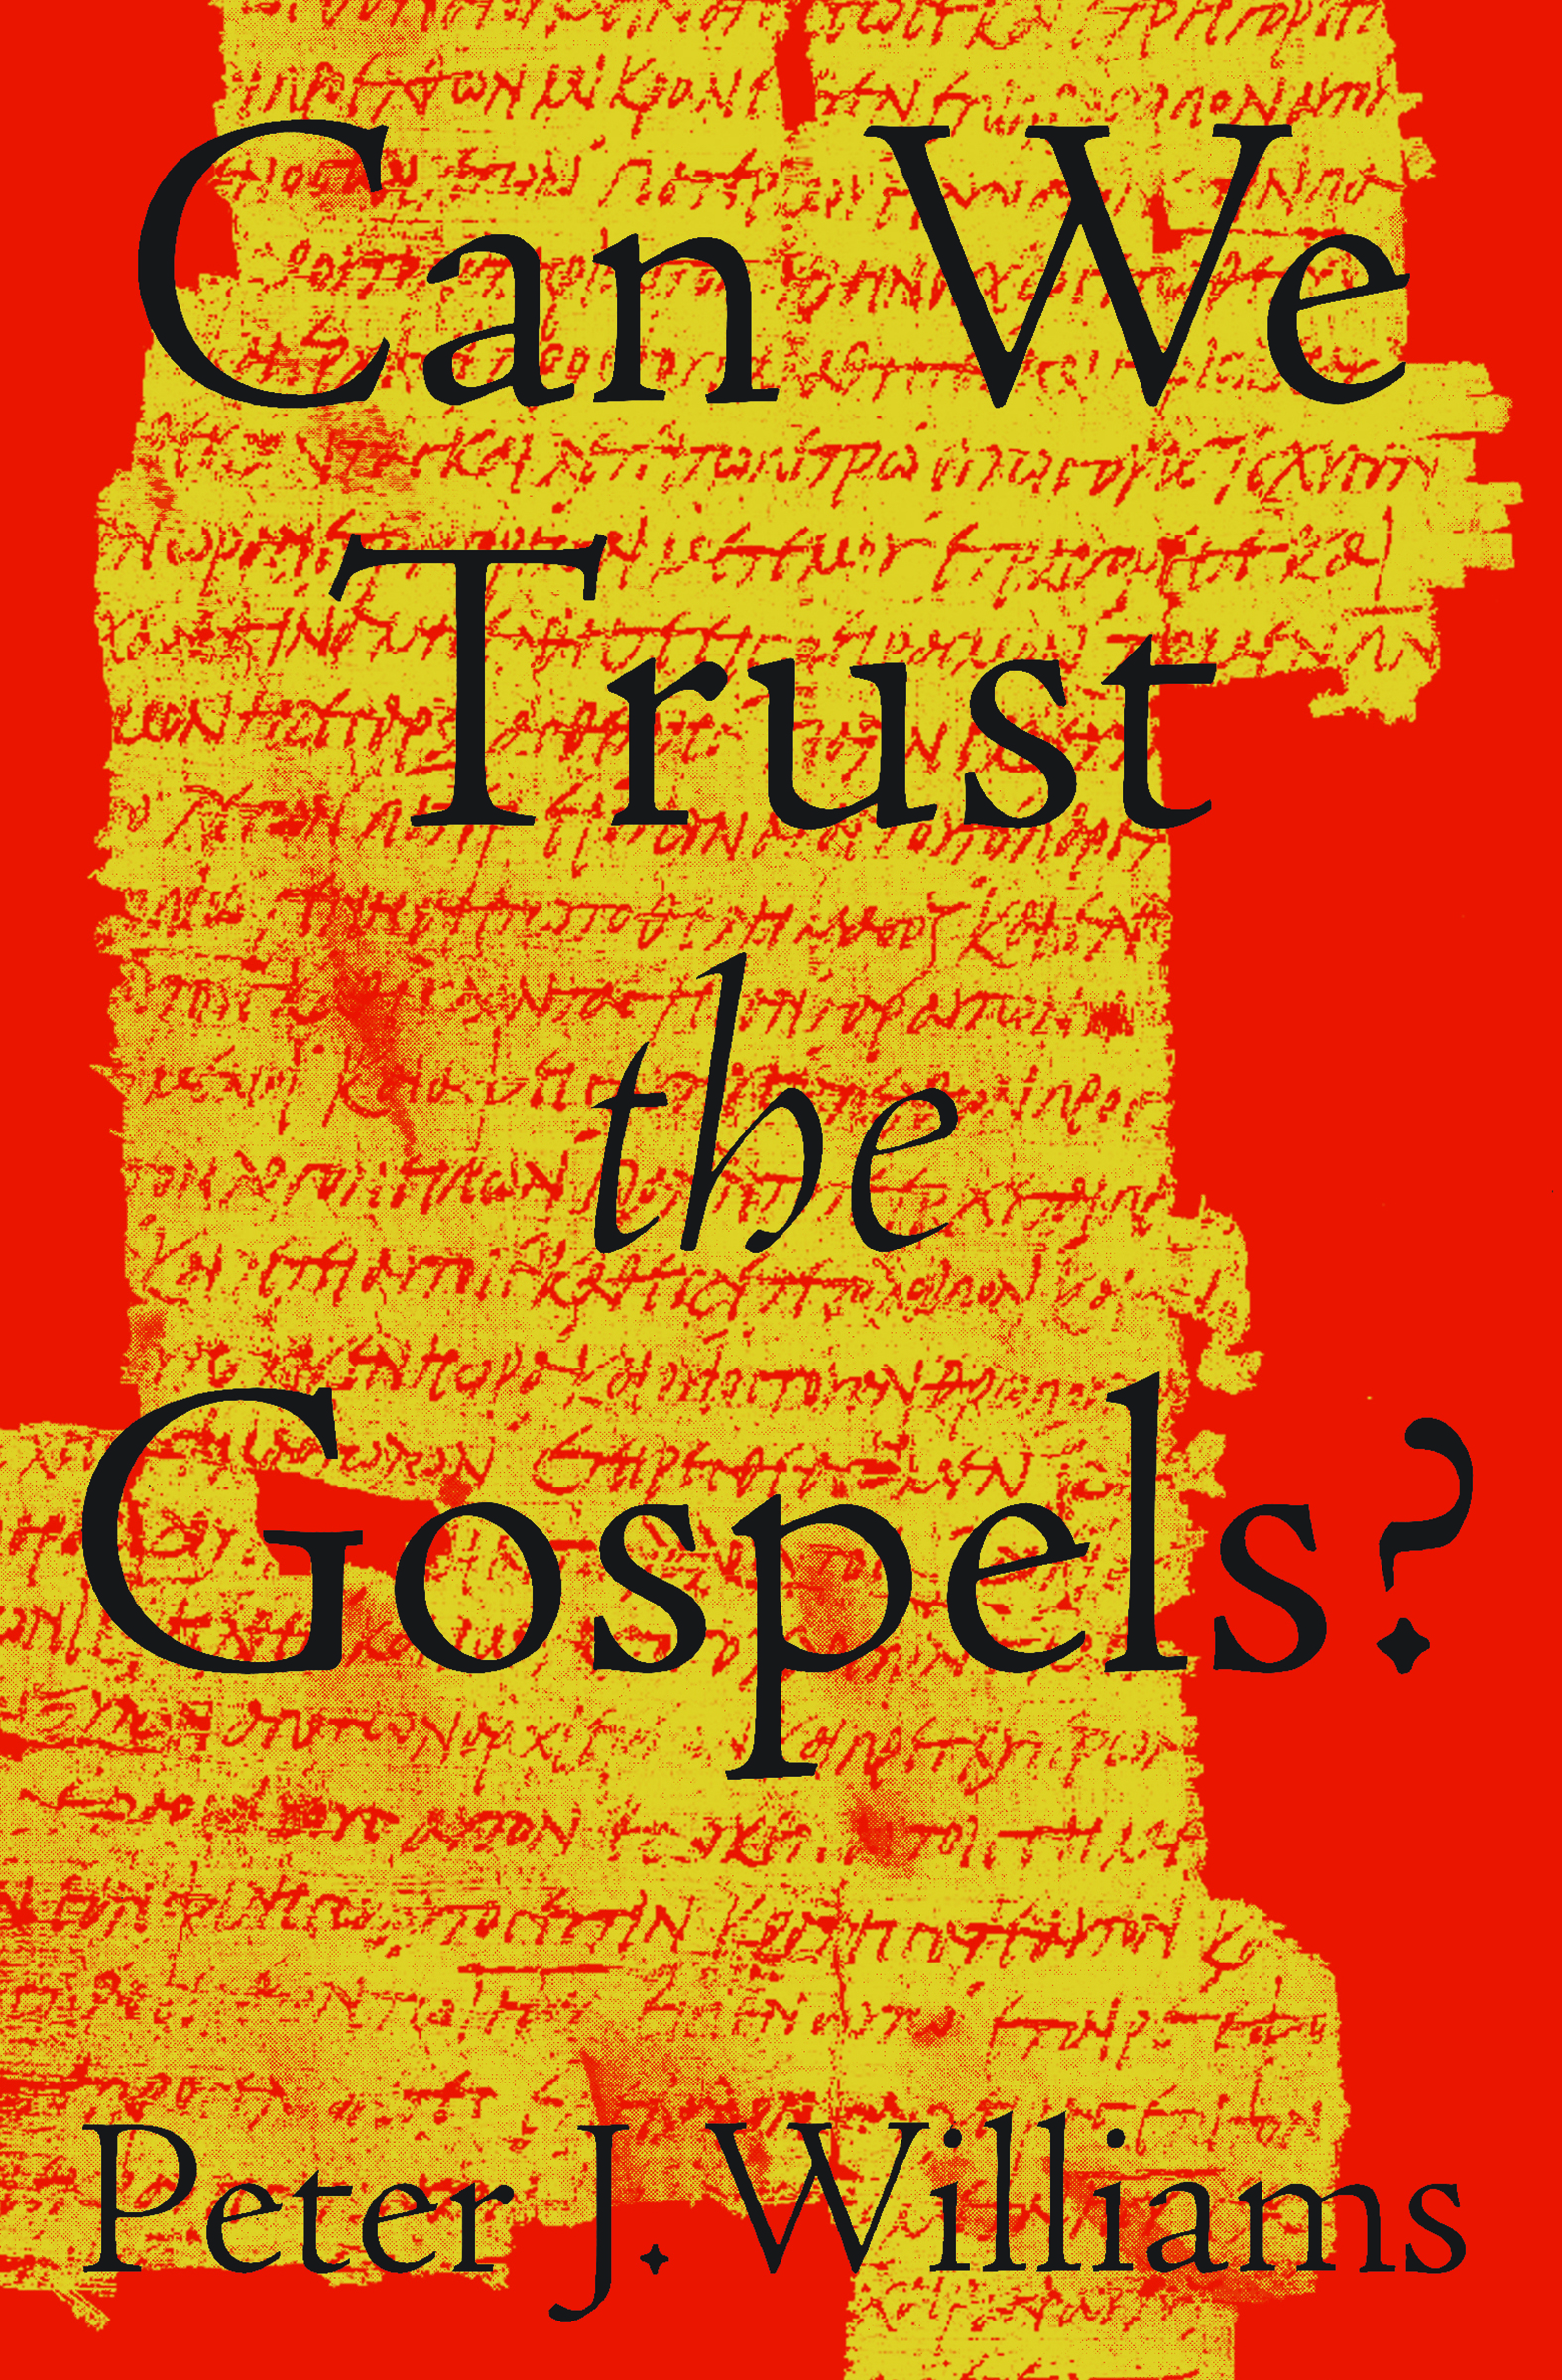 Can We Trust the Gospels?